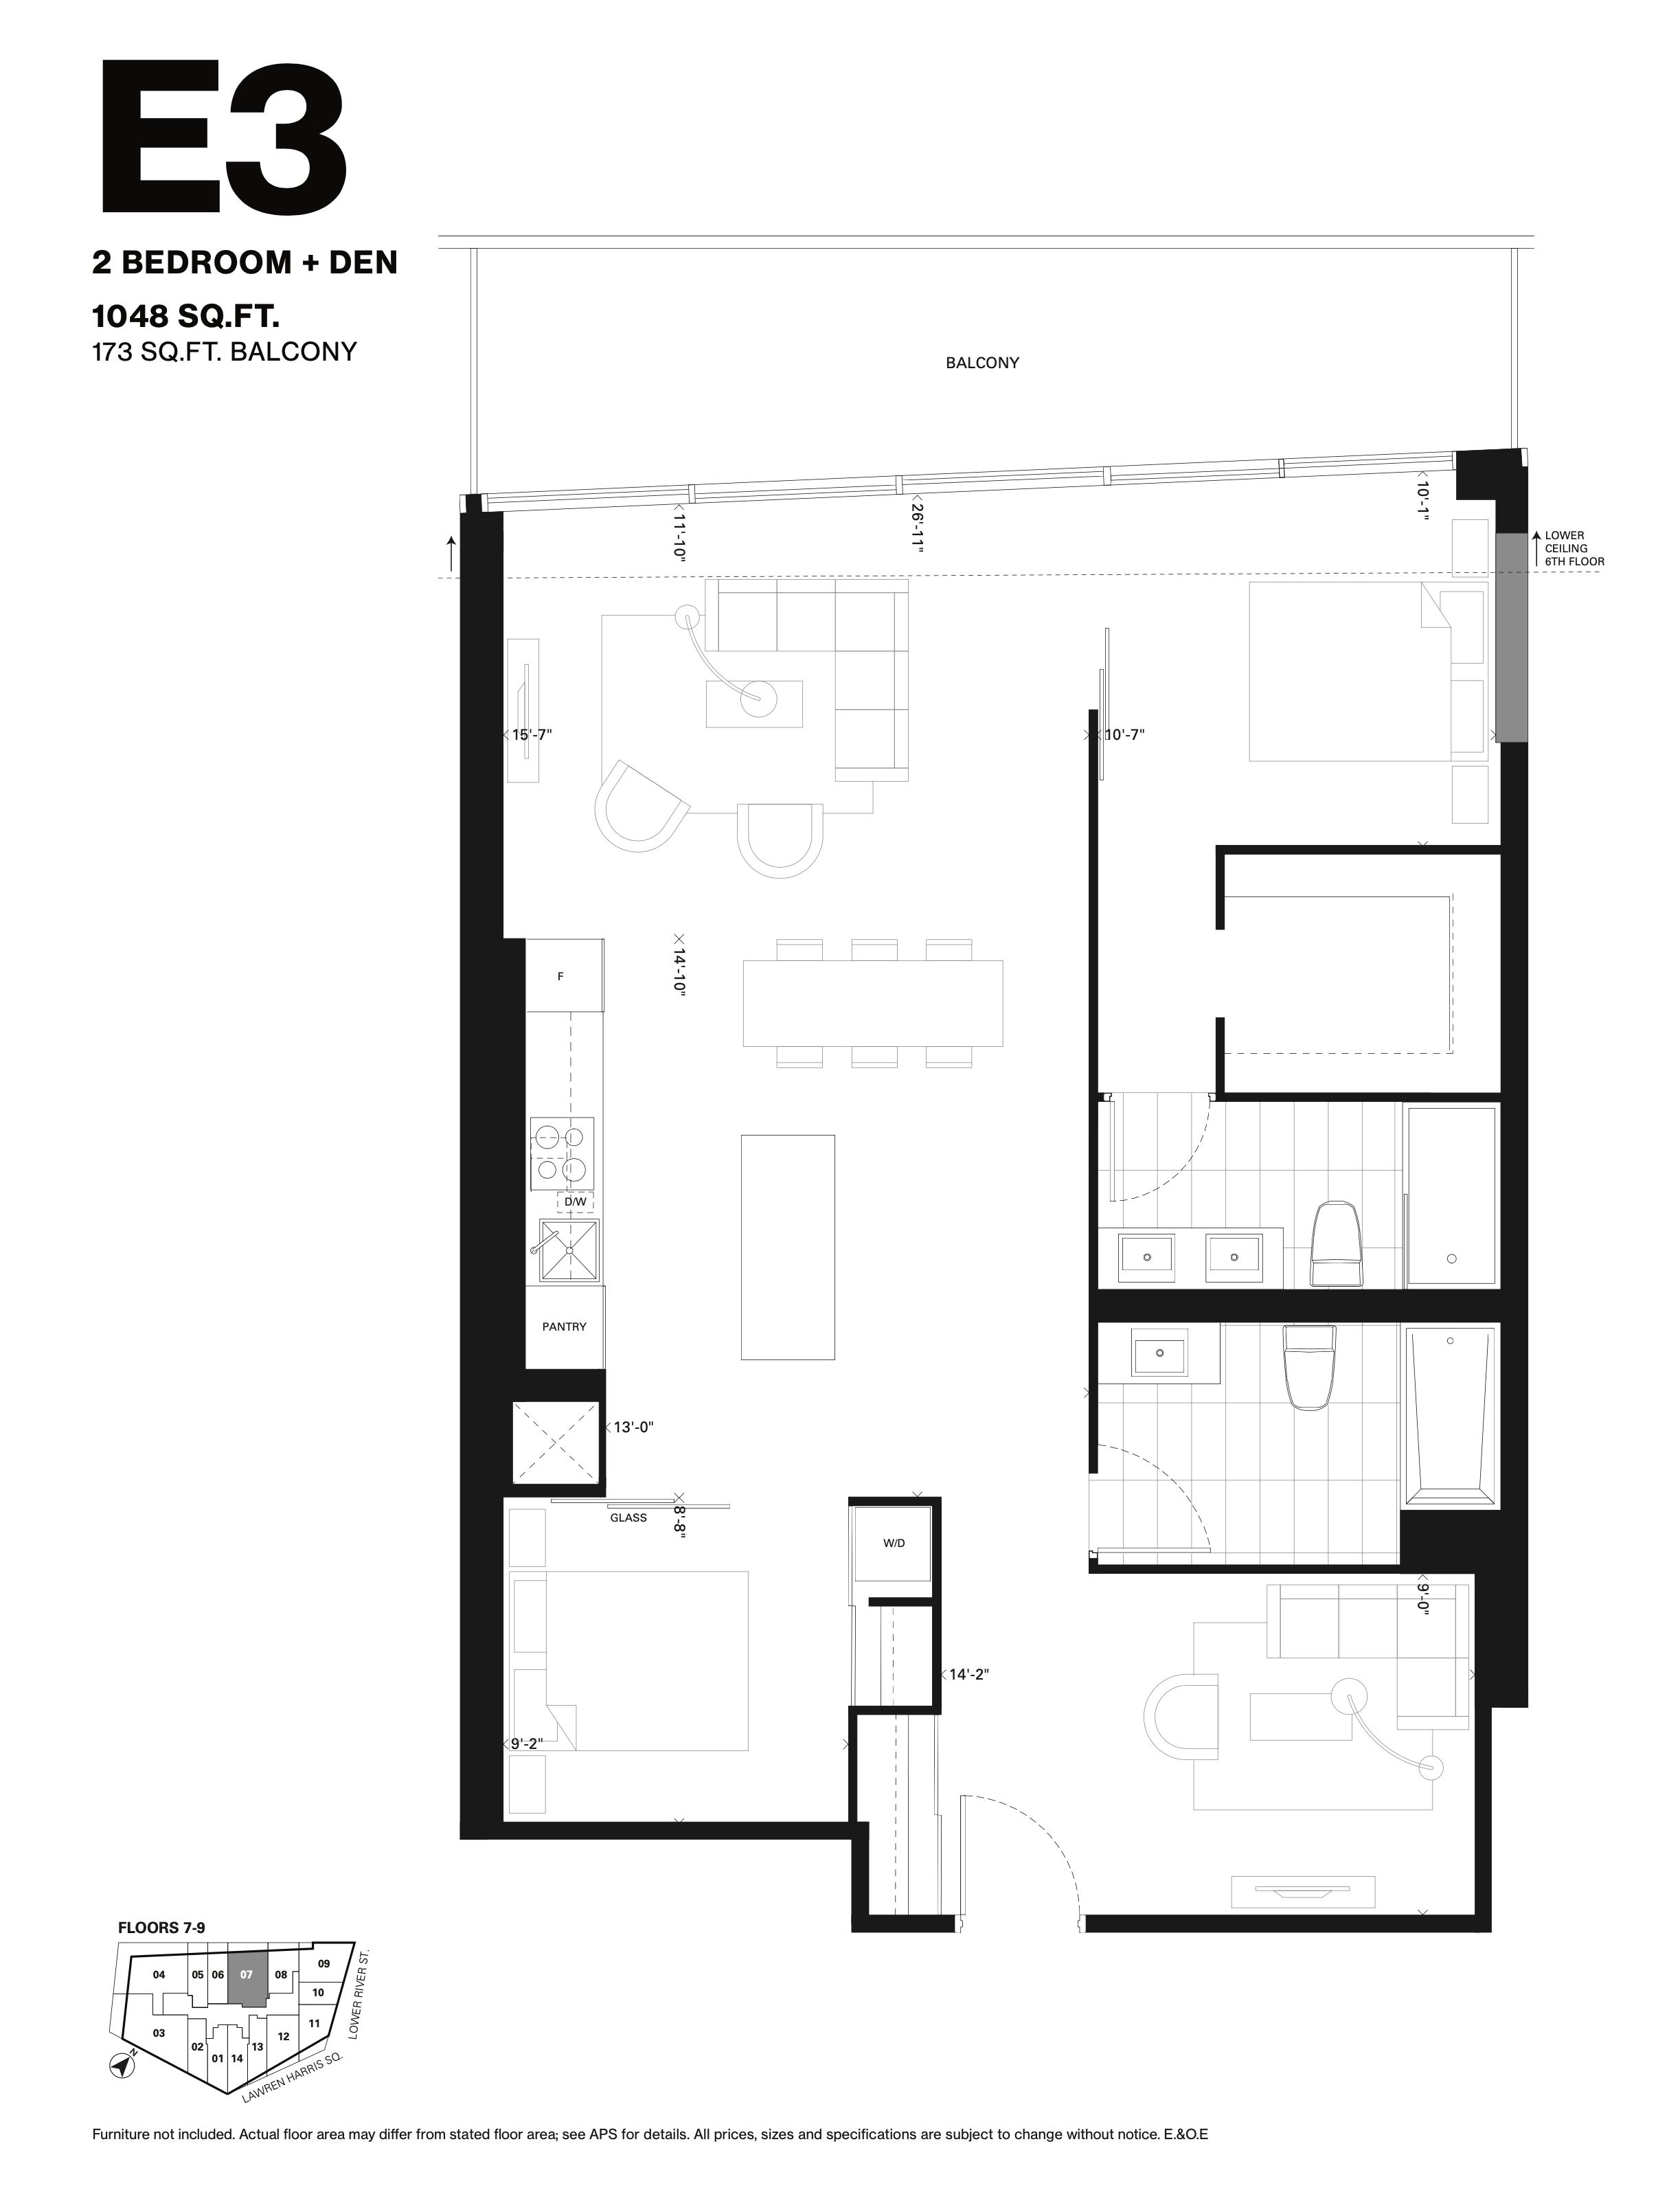 21 Lawren Harris Square 807 - Floor Plan 1048 sq ft - E3.png